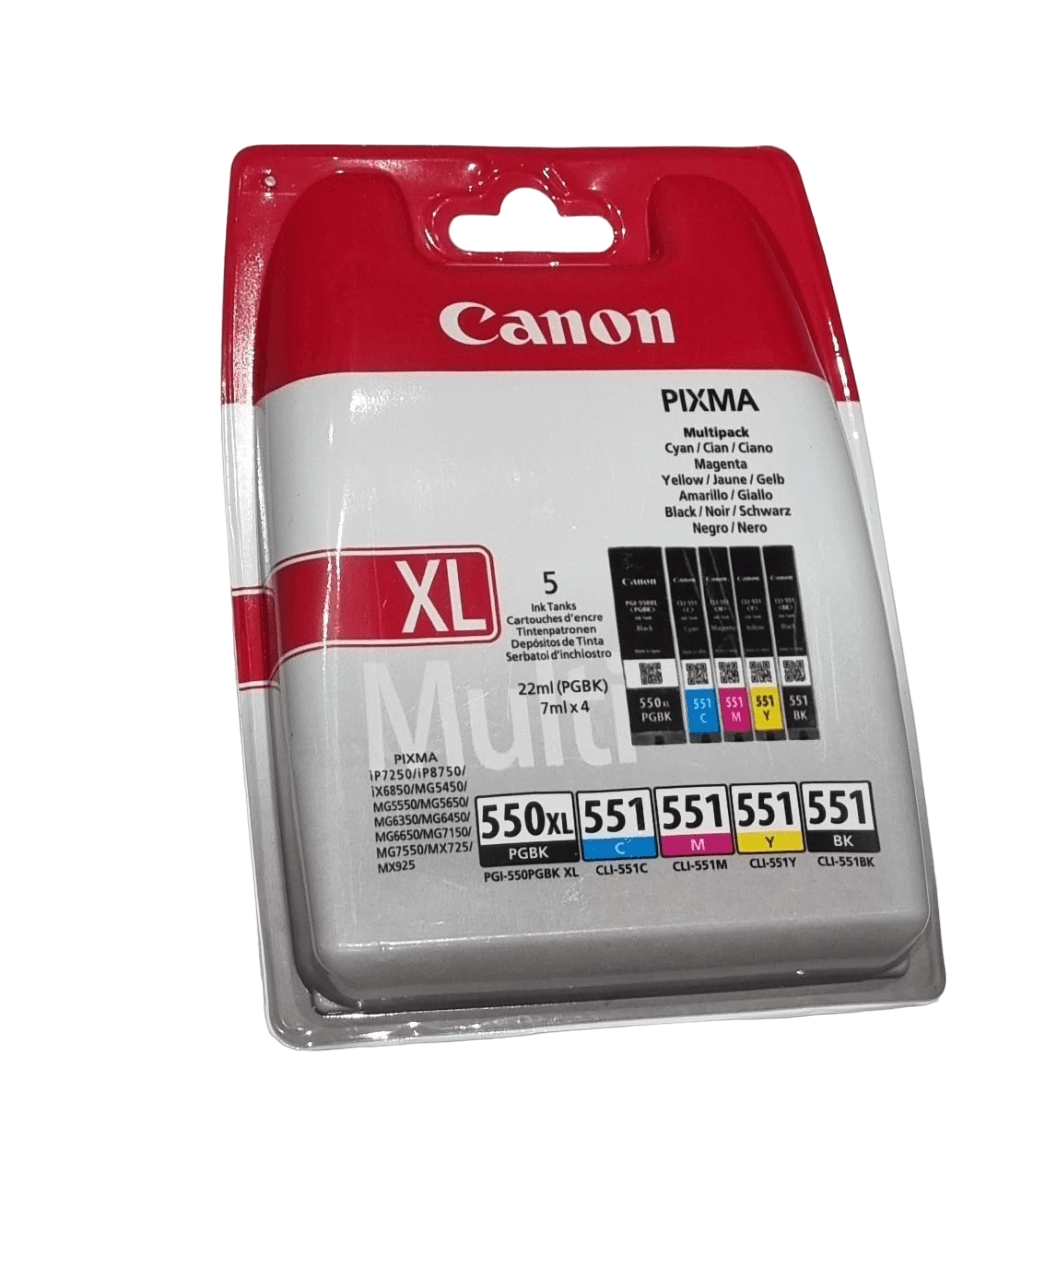 Canon PGI-550PGBK XL CLI-551 Multipack Ink Cartridges Front View